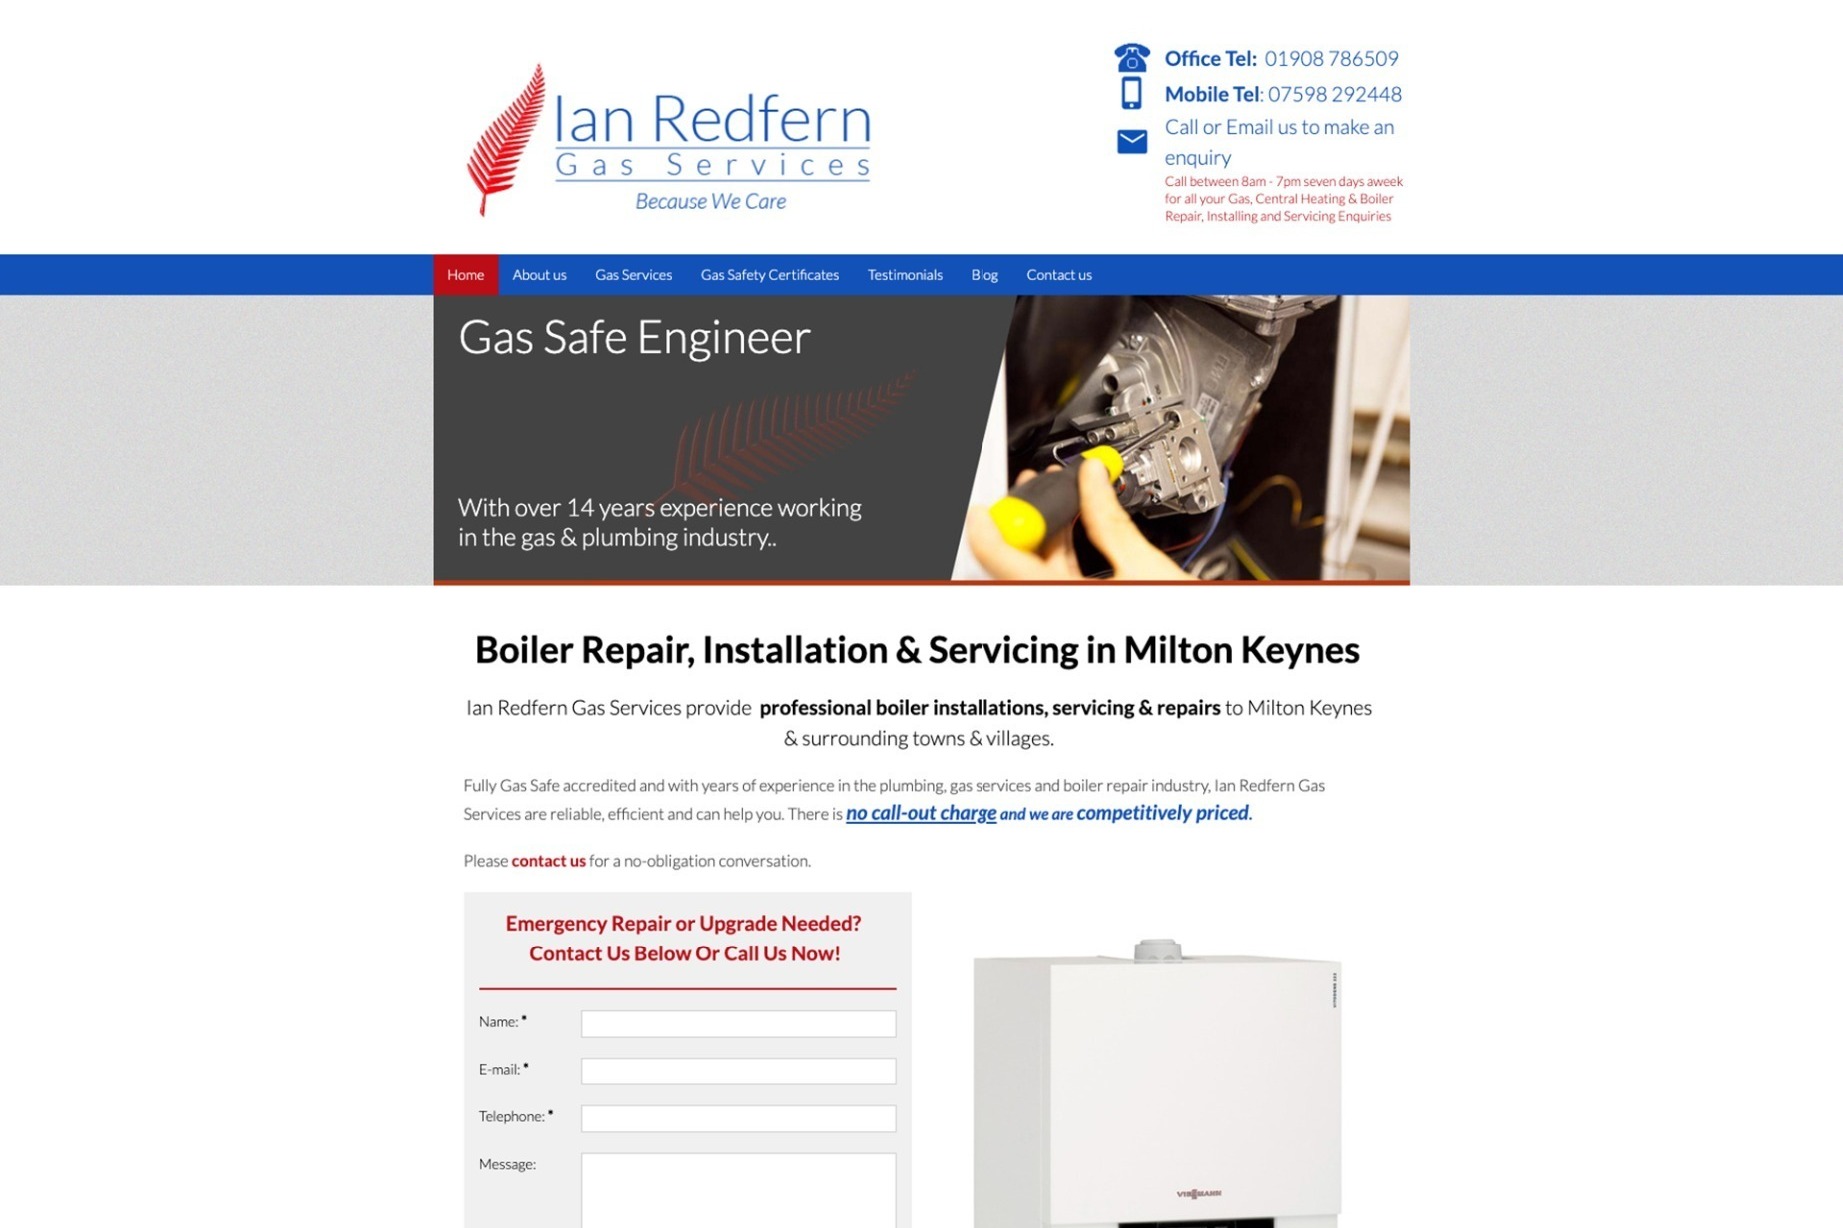 Ian Redfern website - Before redesign